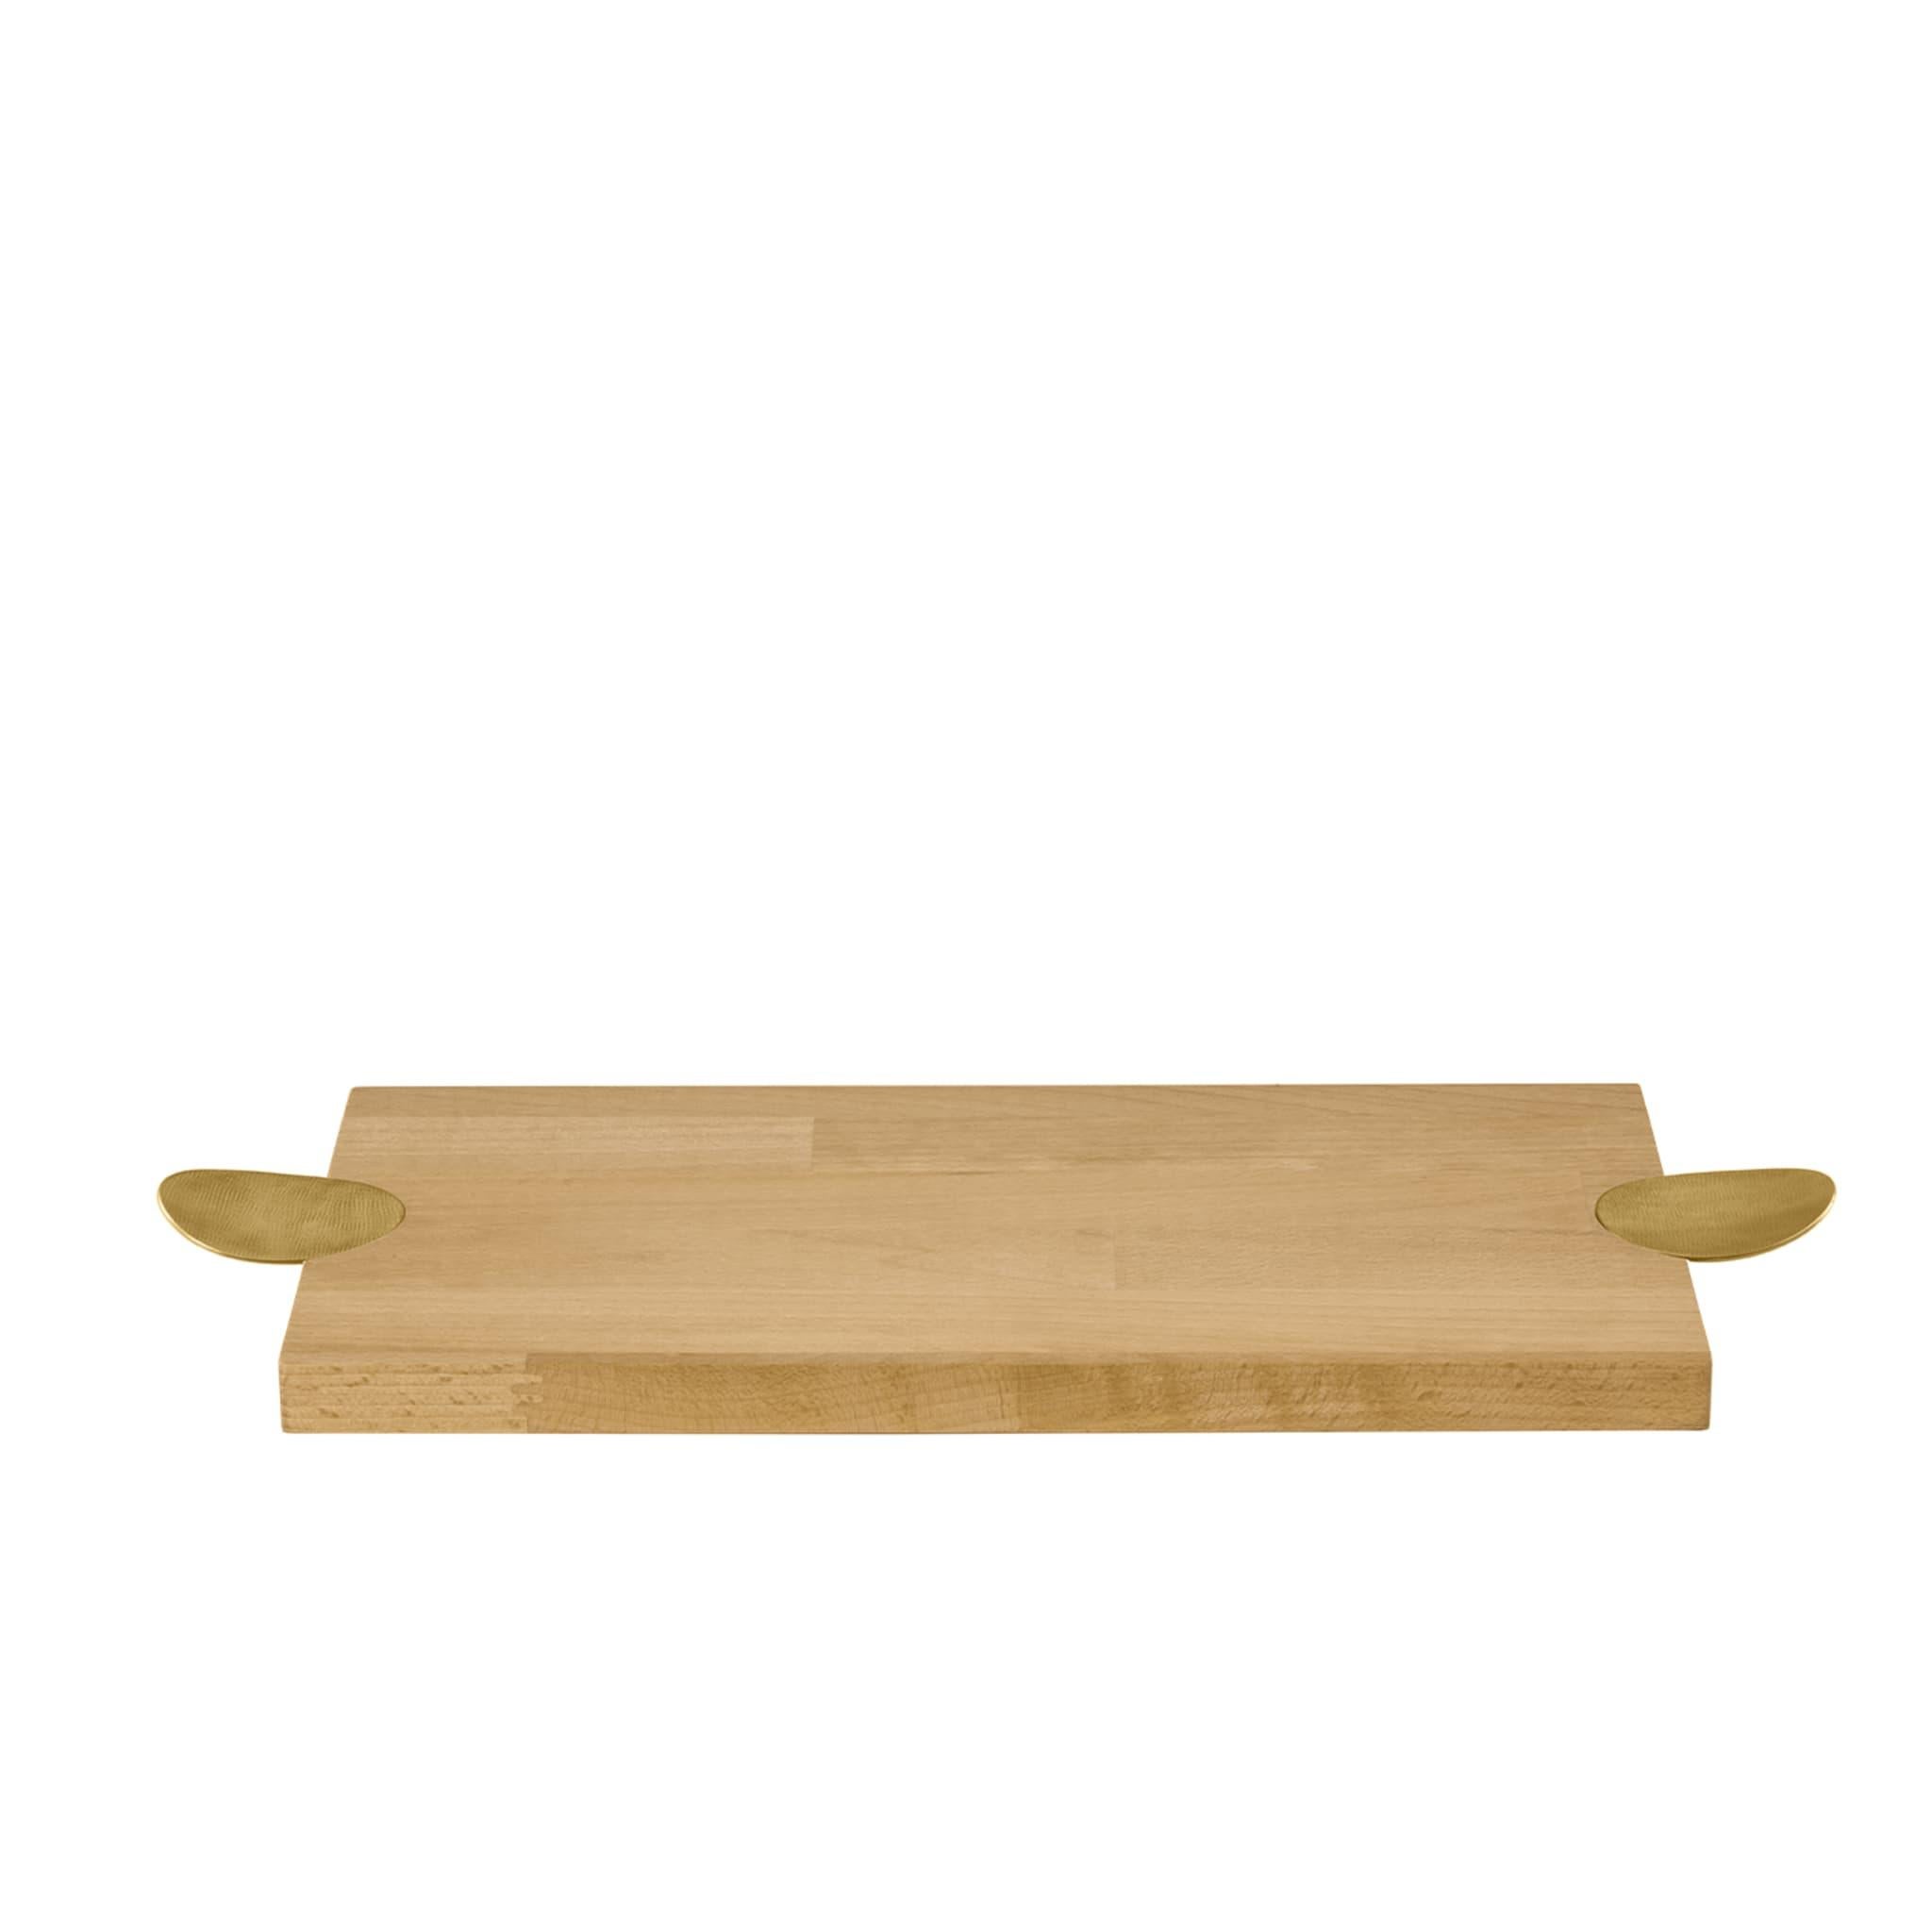 Italian Velvet 1 small cutting board For Sale